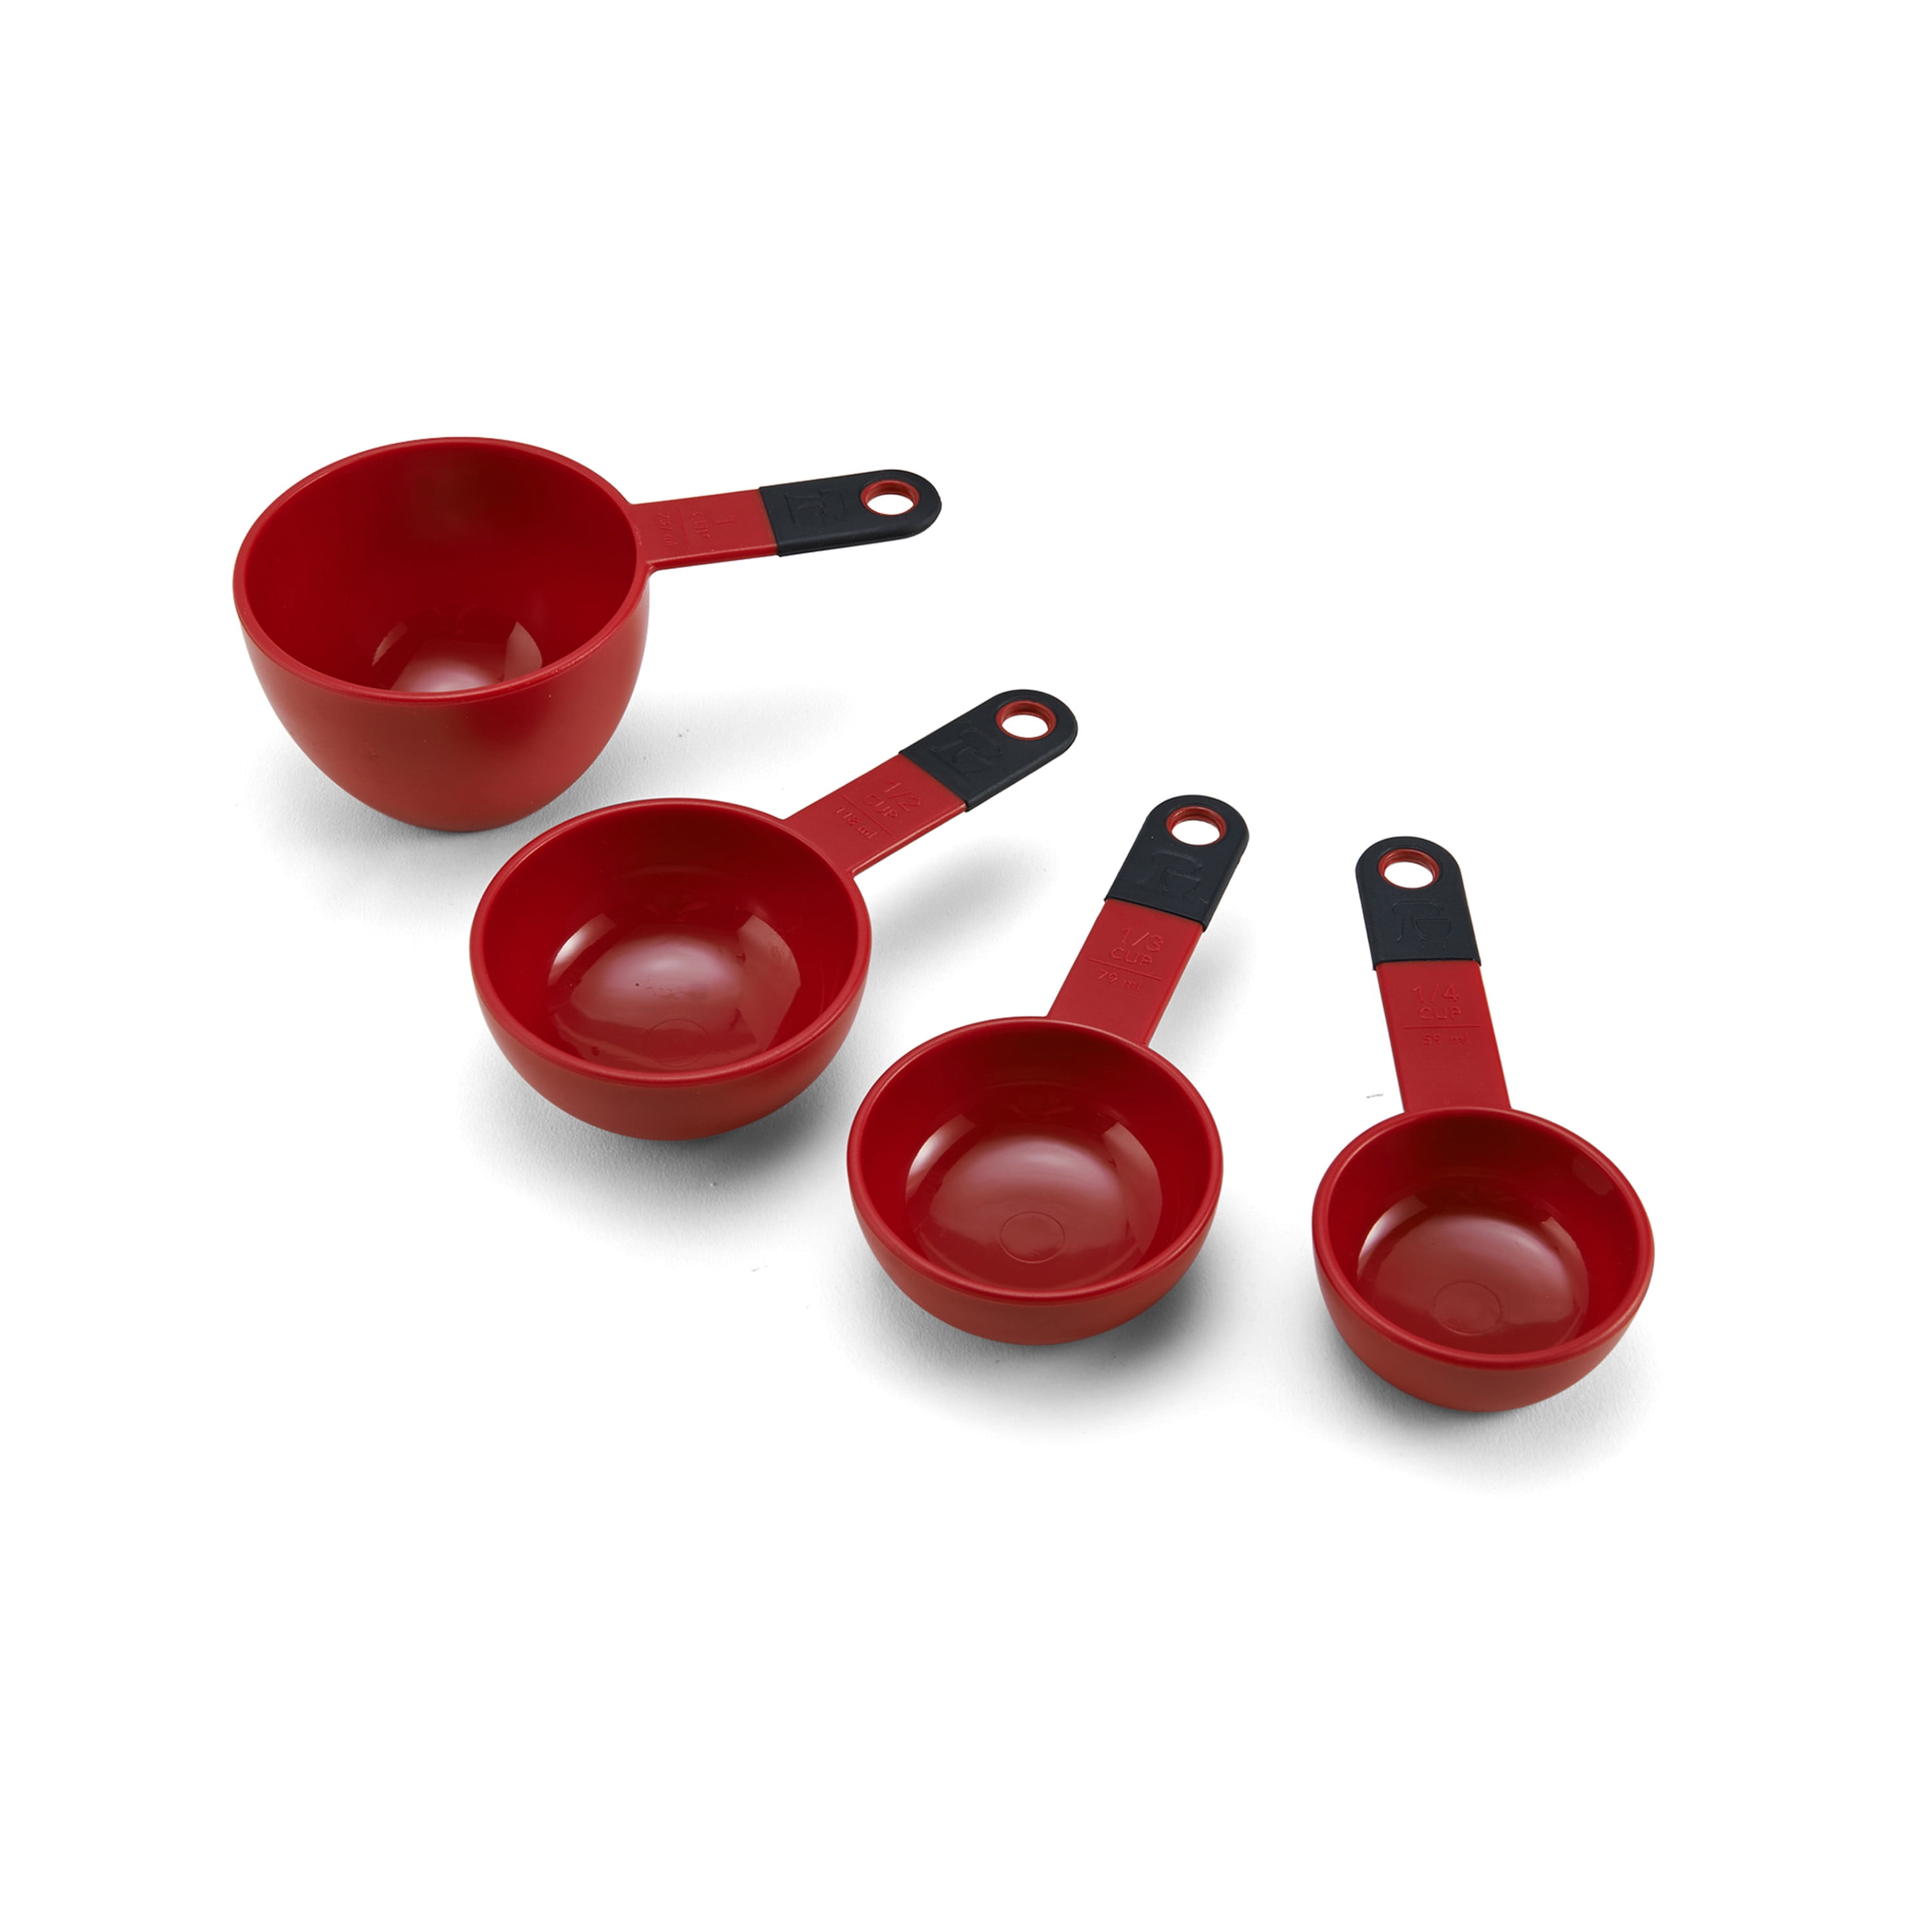 Kitchenaid Set of 4 Dishwasher Safe Plastic Measuring-cups in Red 